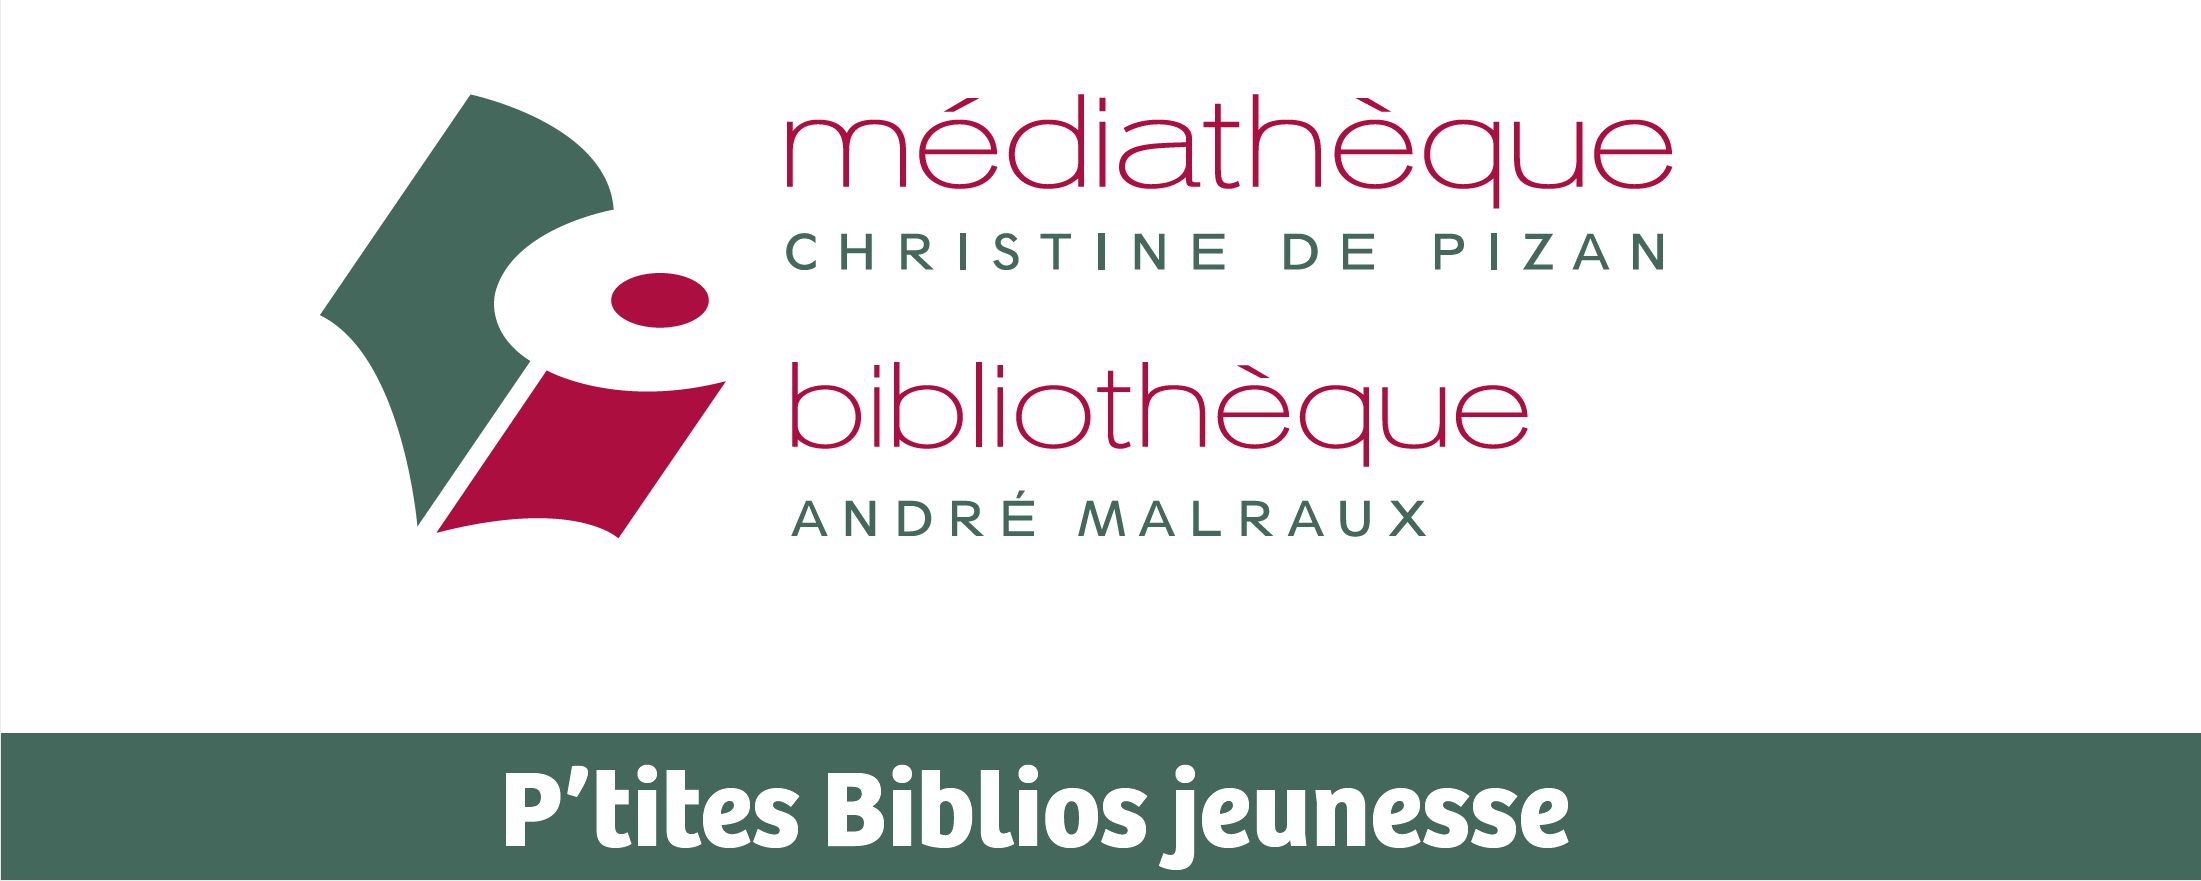 mediatheque ptittesbiblios